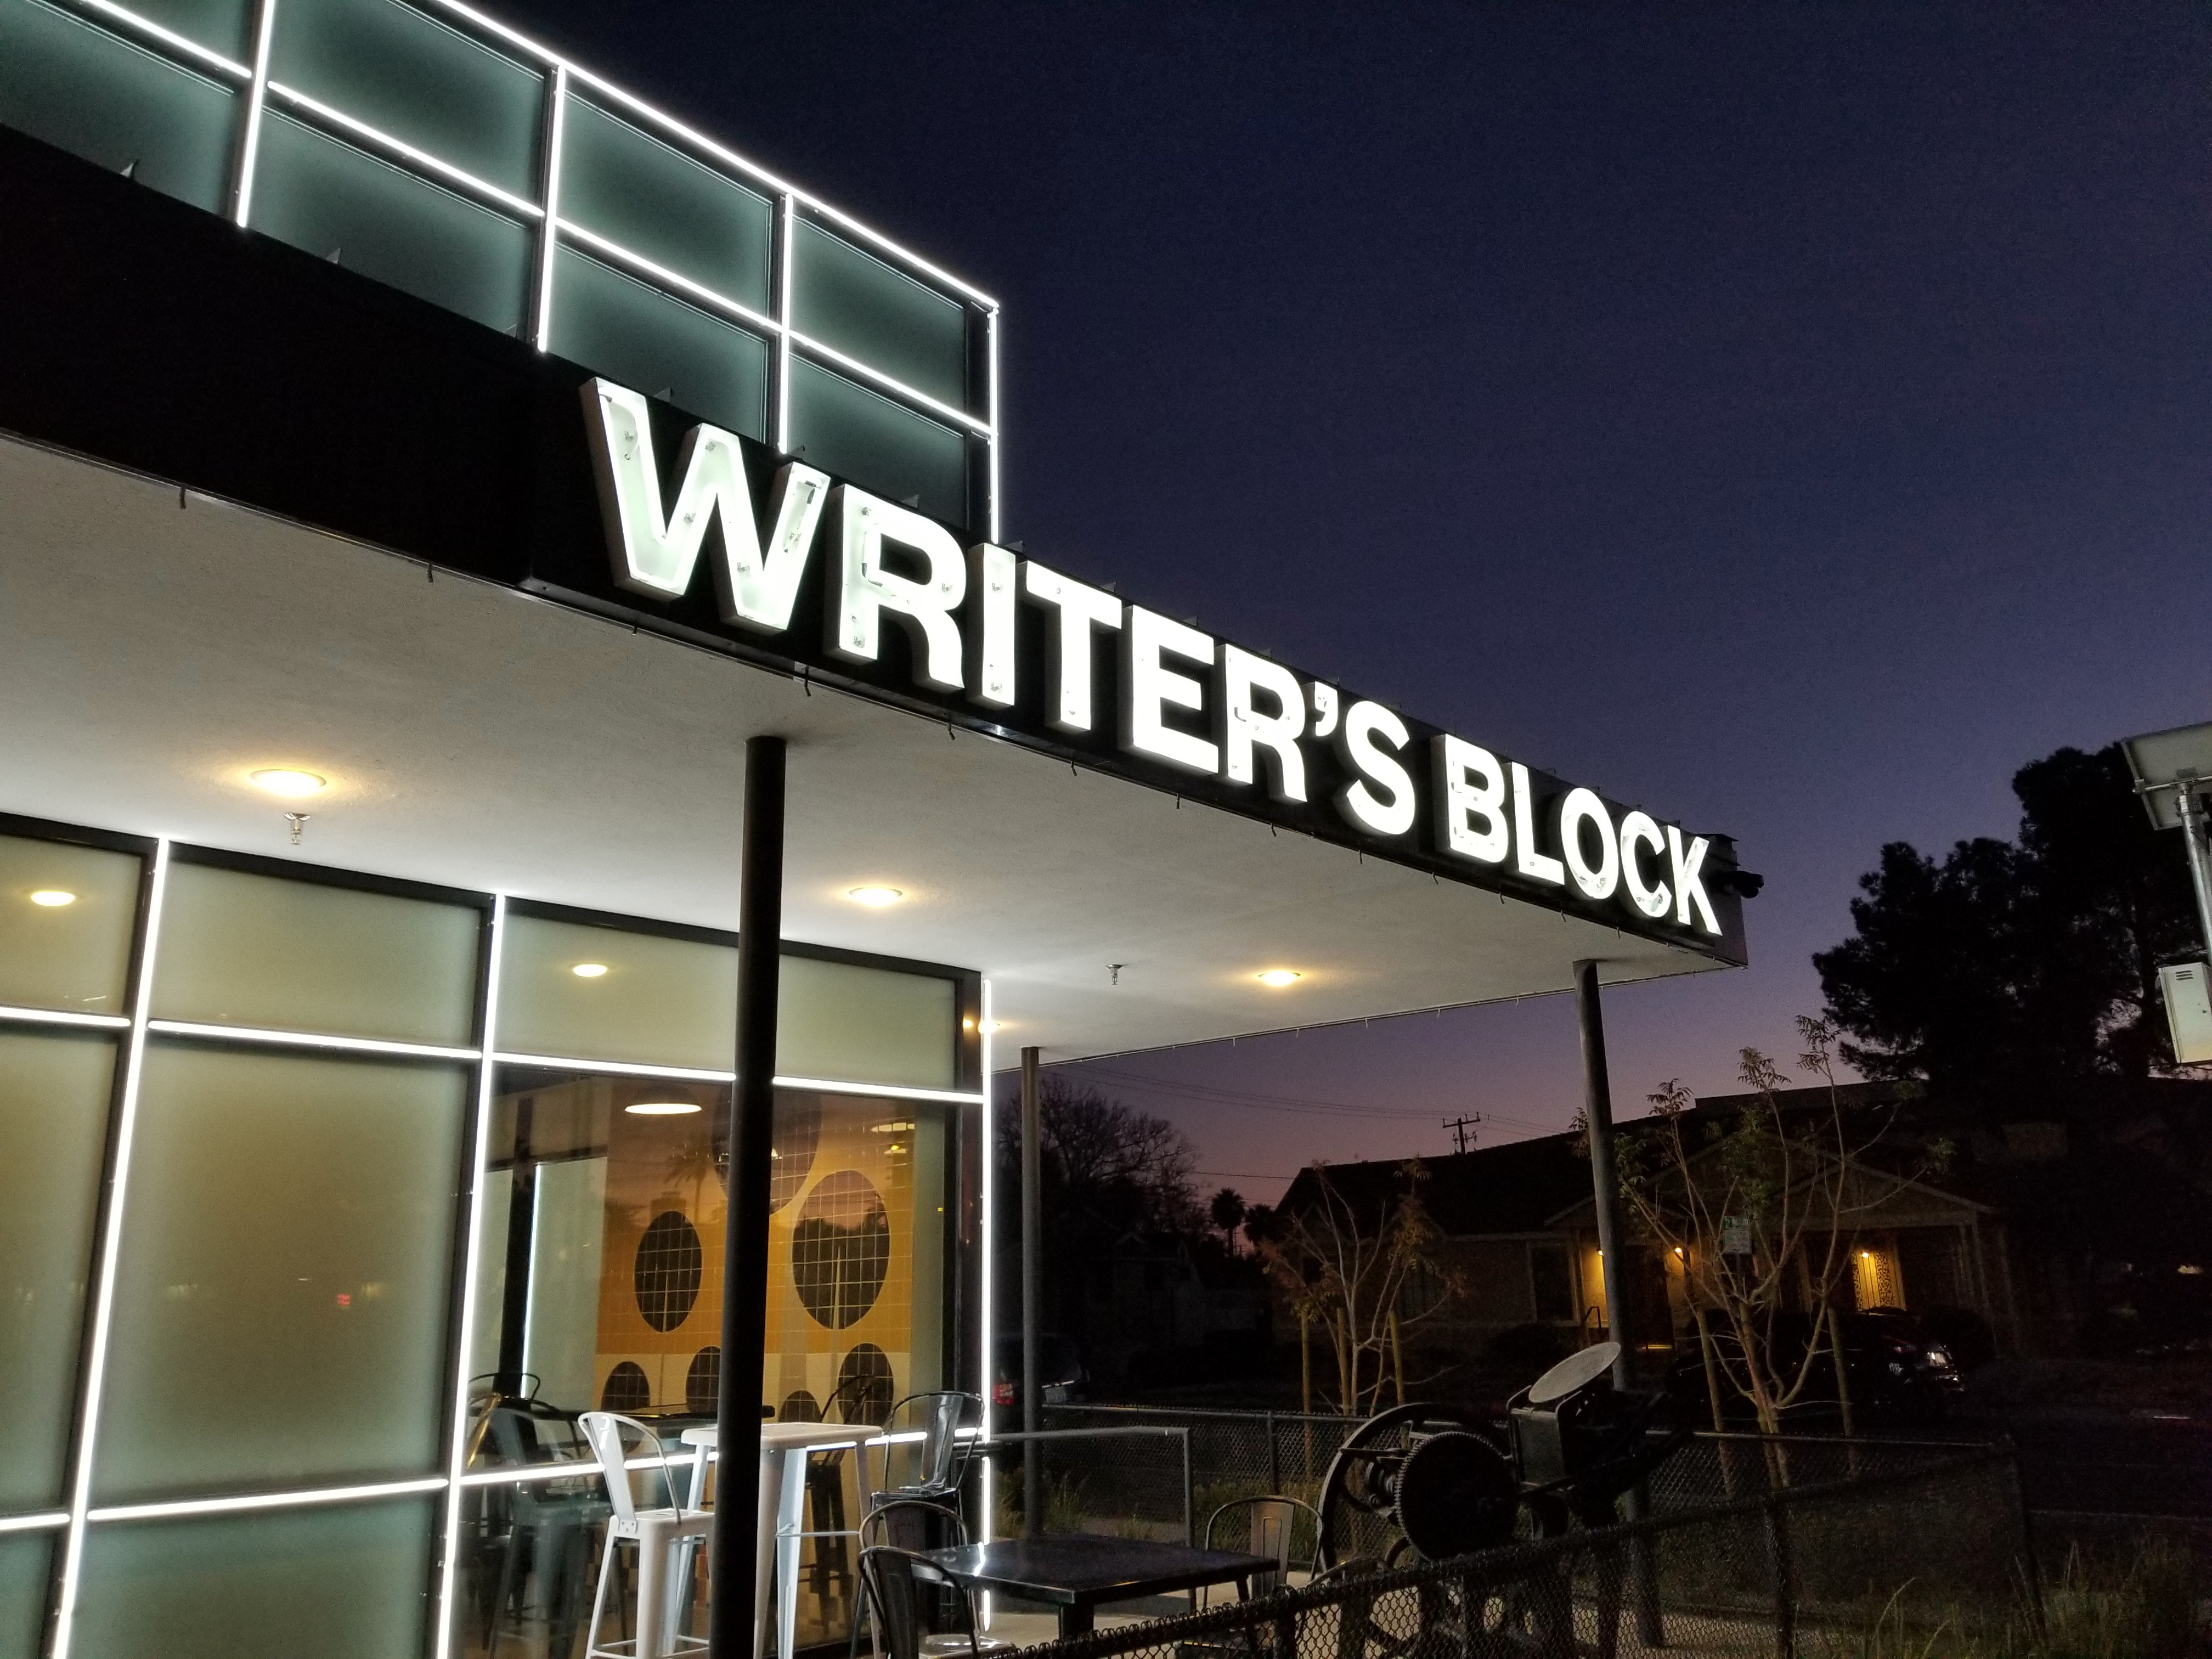 The Writer's Block - Wikipedia